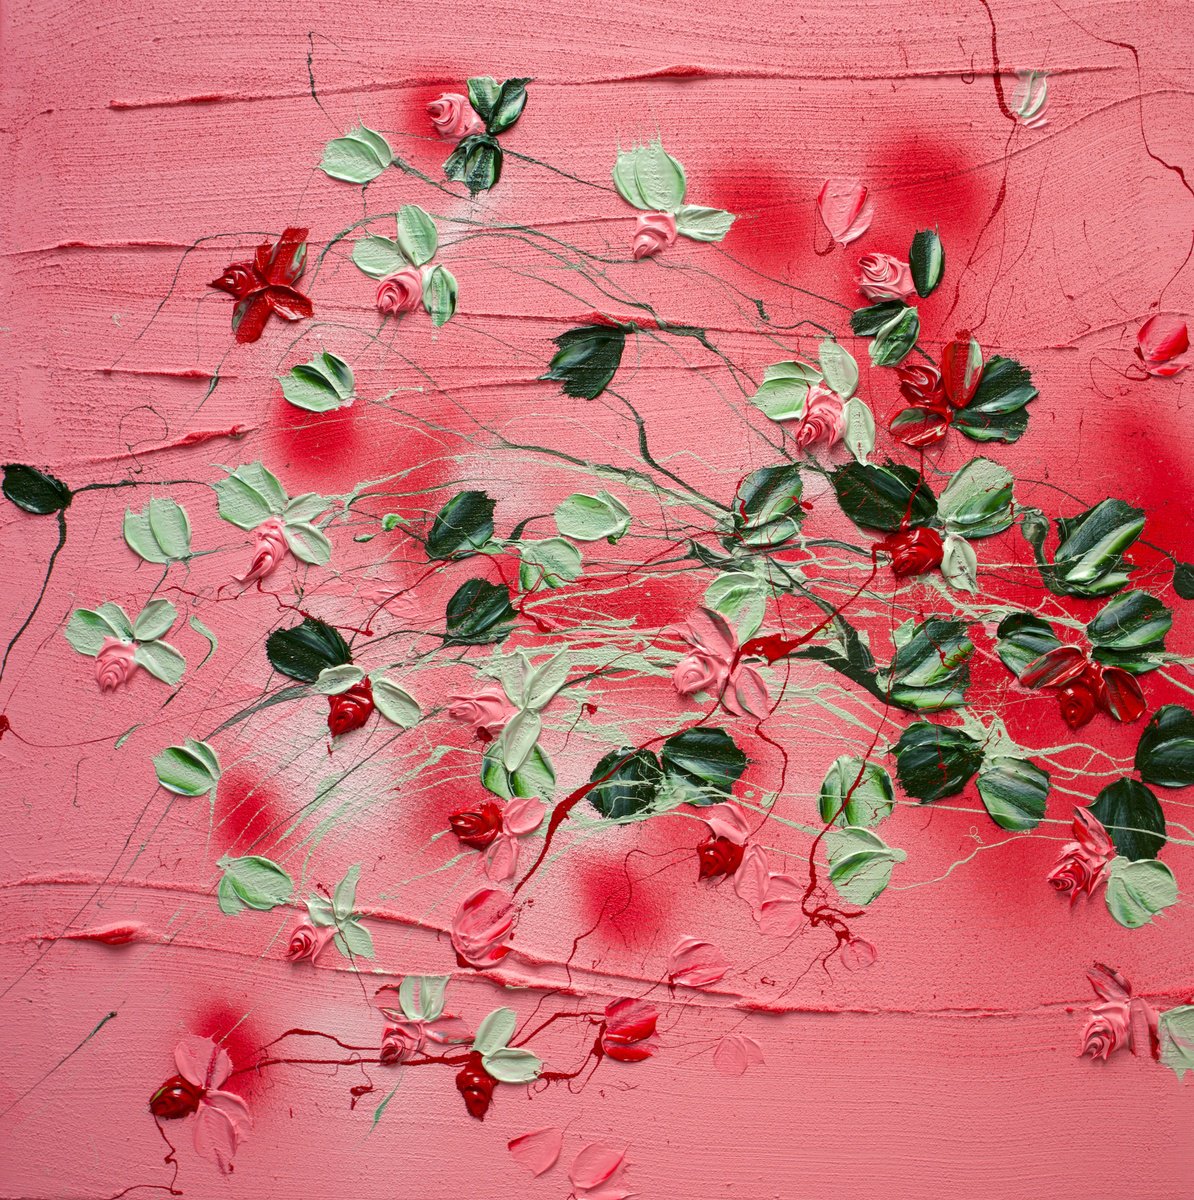 Textured flowers art "Pink Mood" by Anastassia Skopp